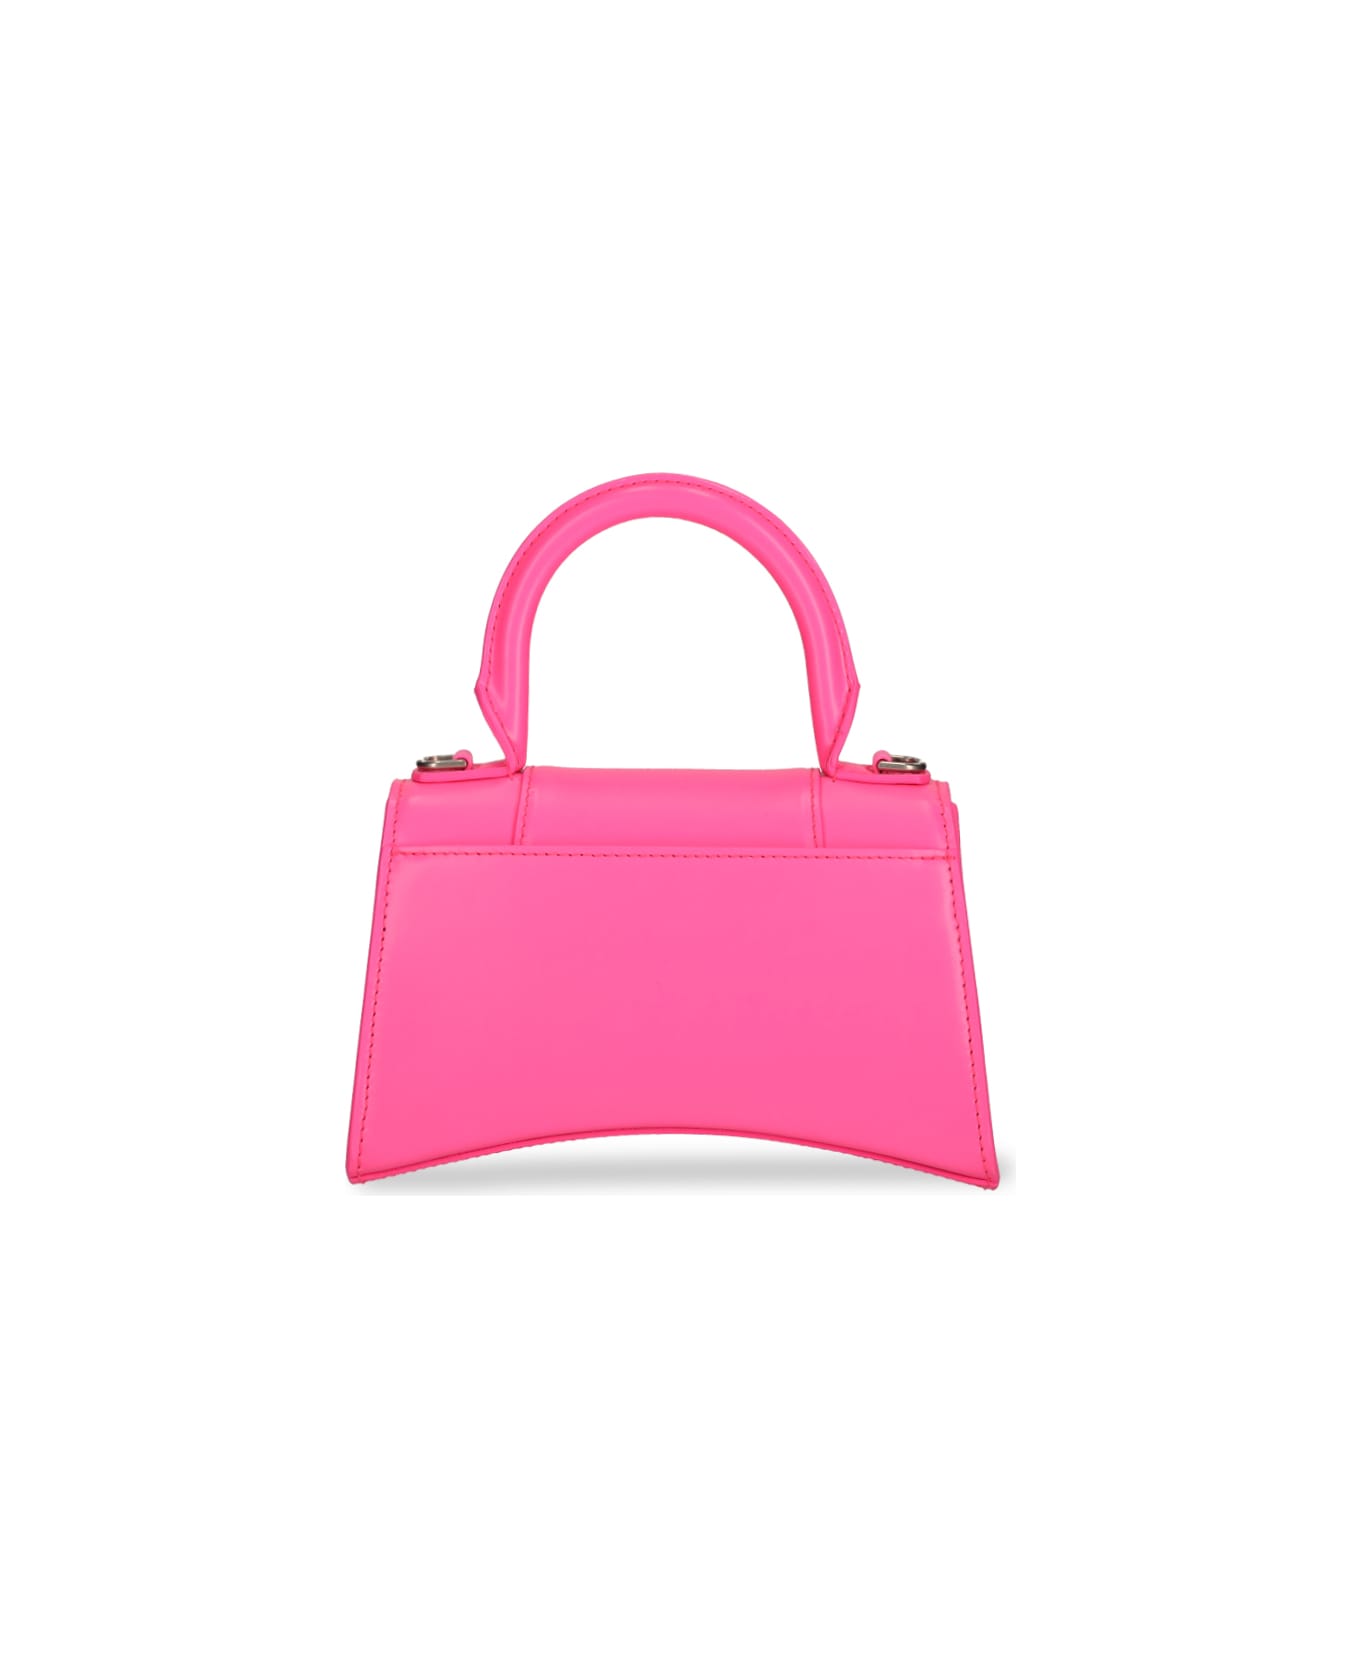 Balenciaga Hourglass Handbag - Pink